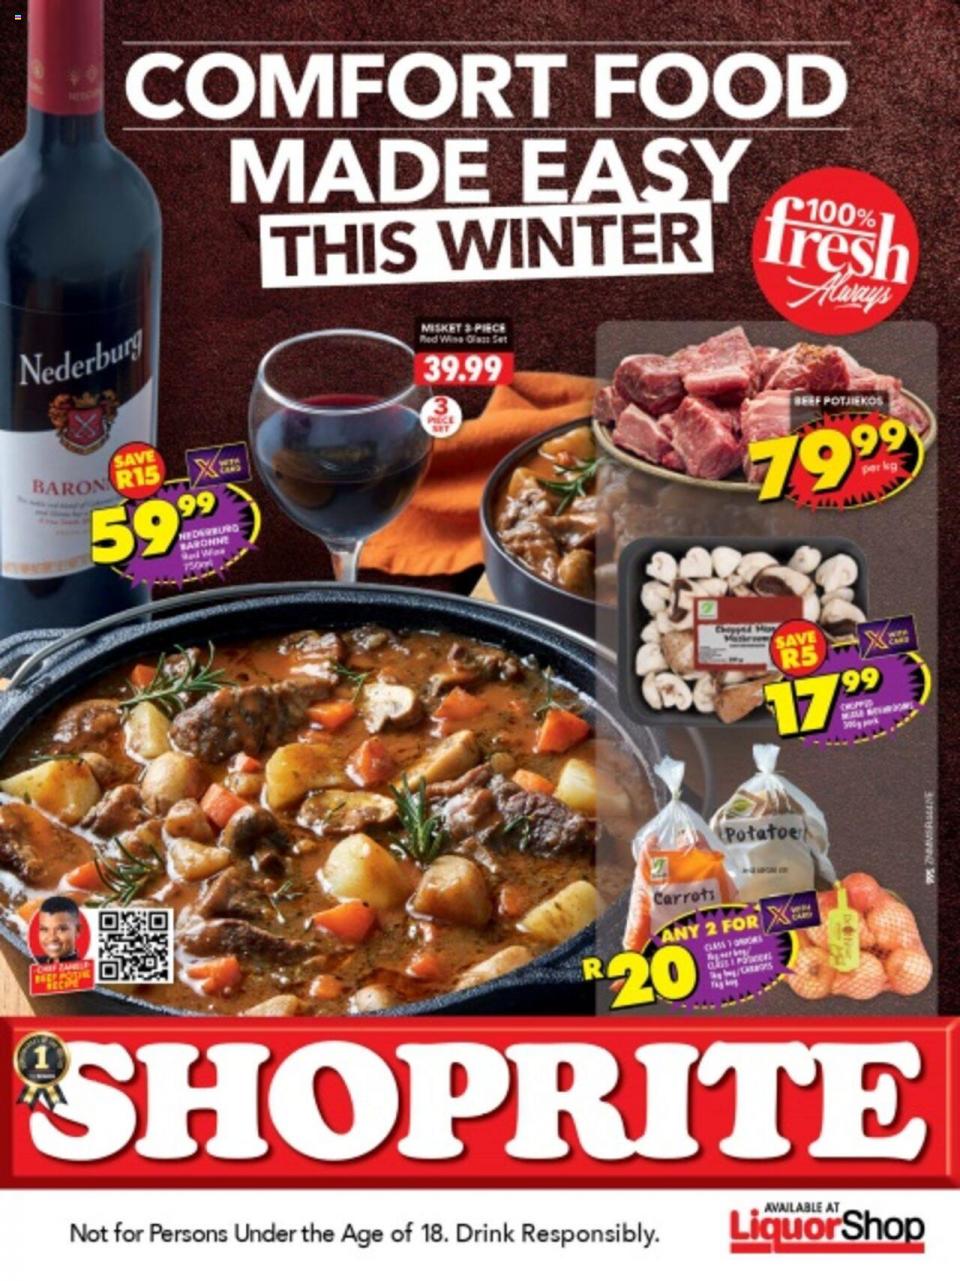 Shoprite Specials Comfort Food Made Easy This Winter 21 Jun – 4 Jul 2021